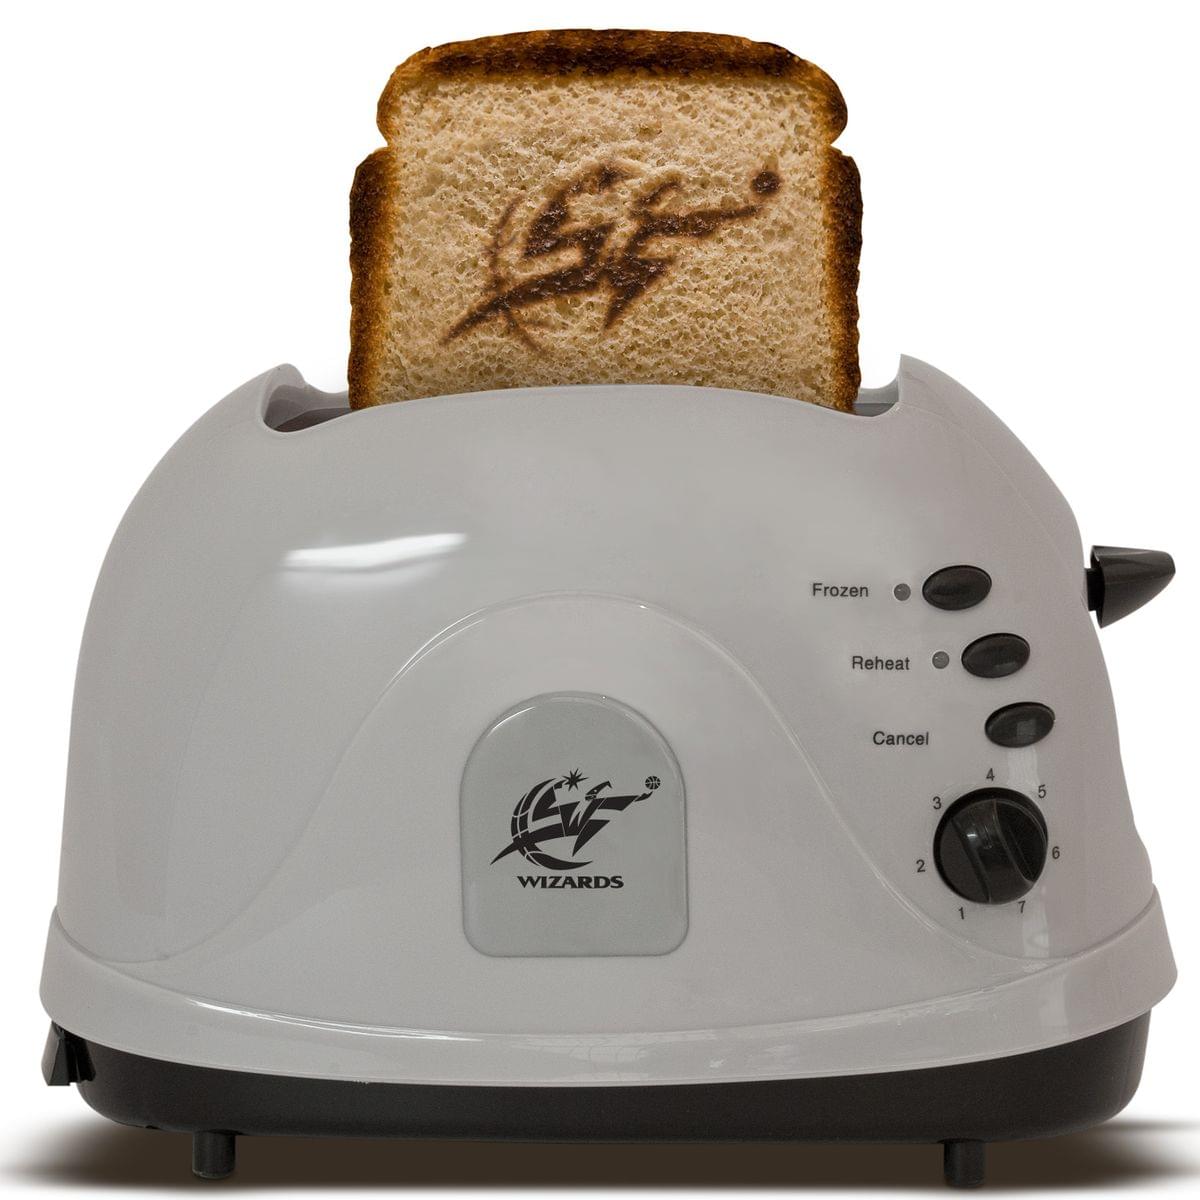 Washington Wizards NBA ProToast Toaster